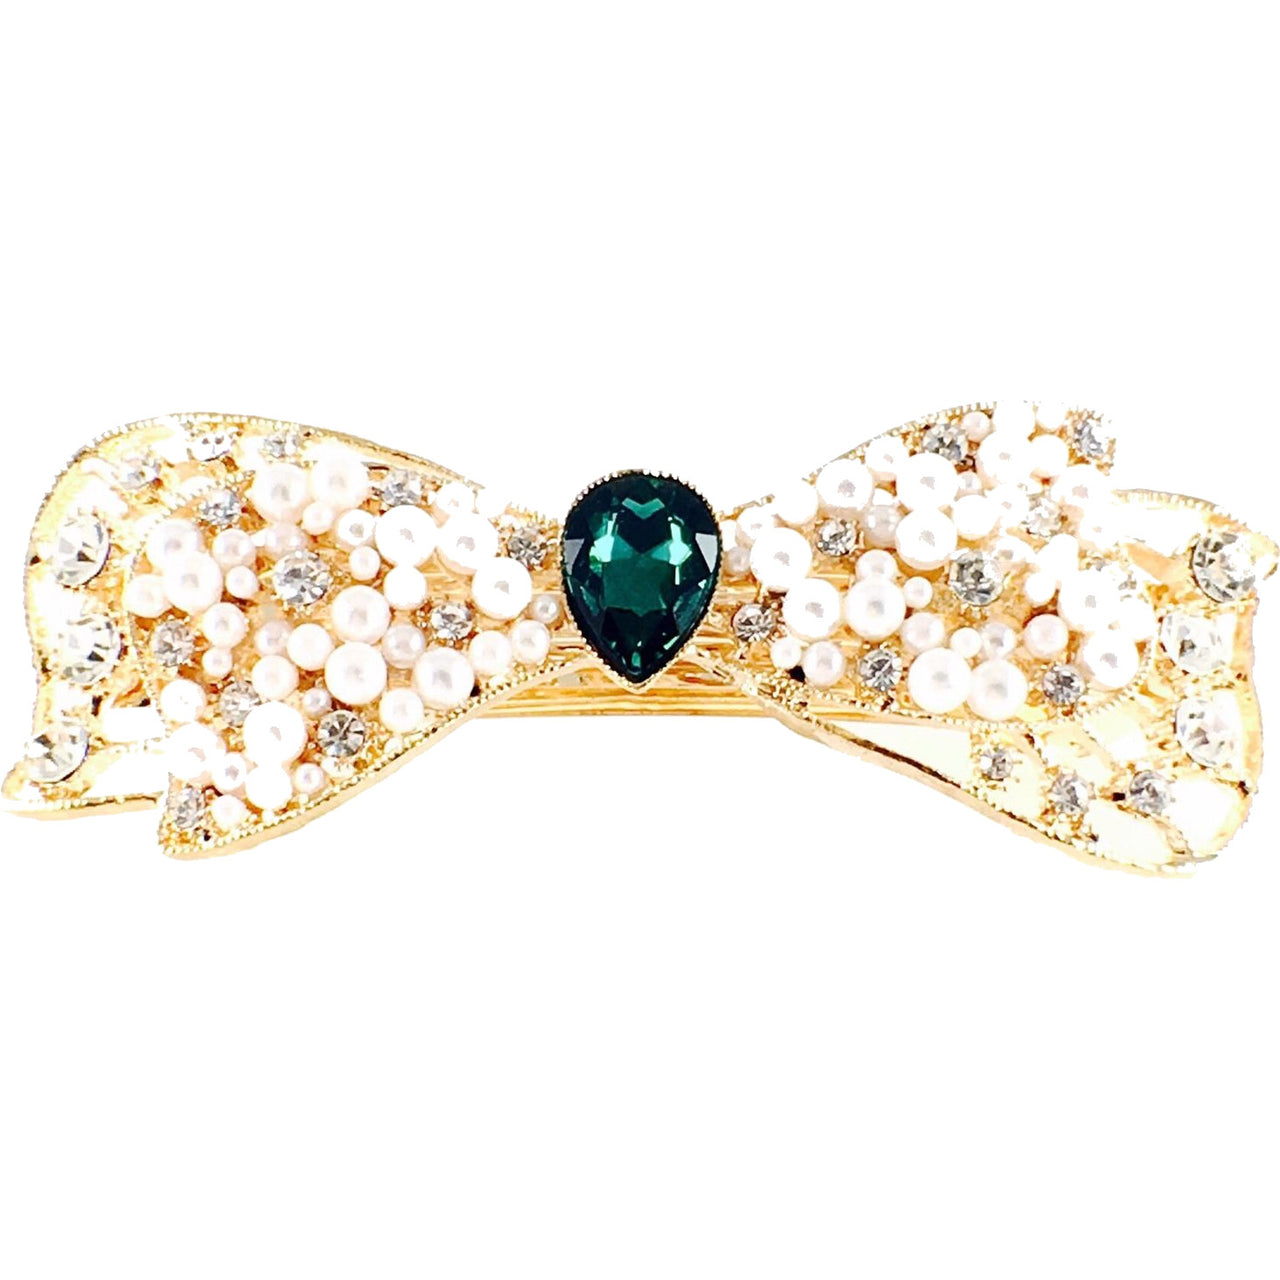 Bow Knot Barrette Rhinestone Crystal gold base white pearls Clear Green, Barrette - MOGHANT